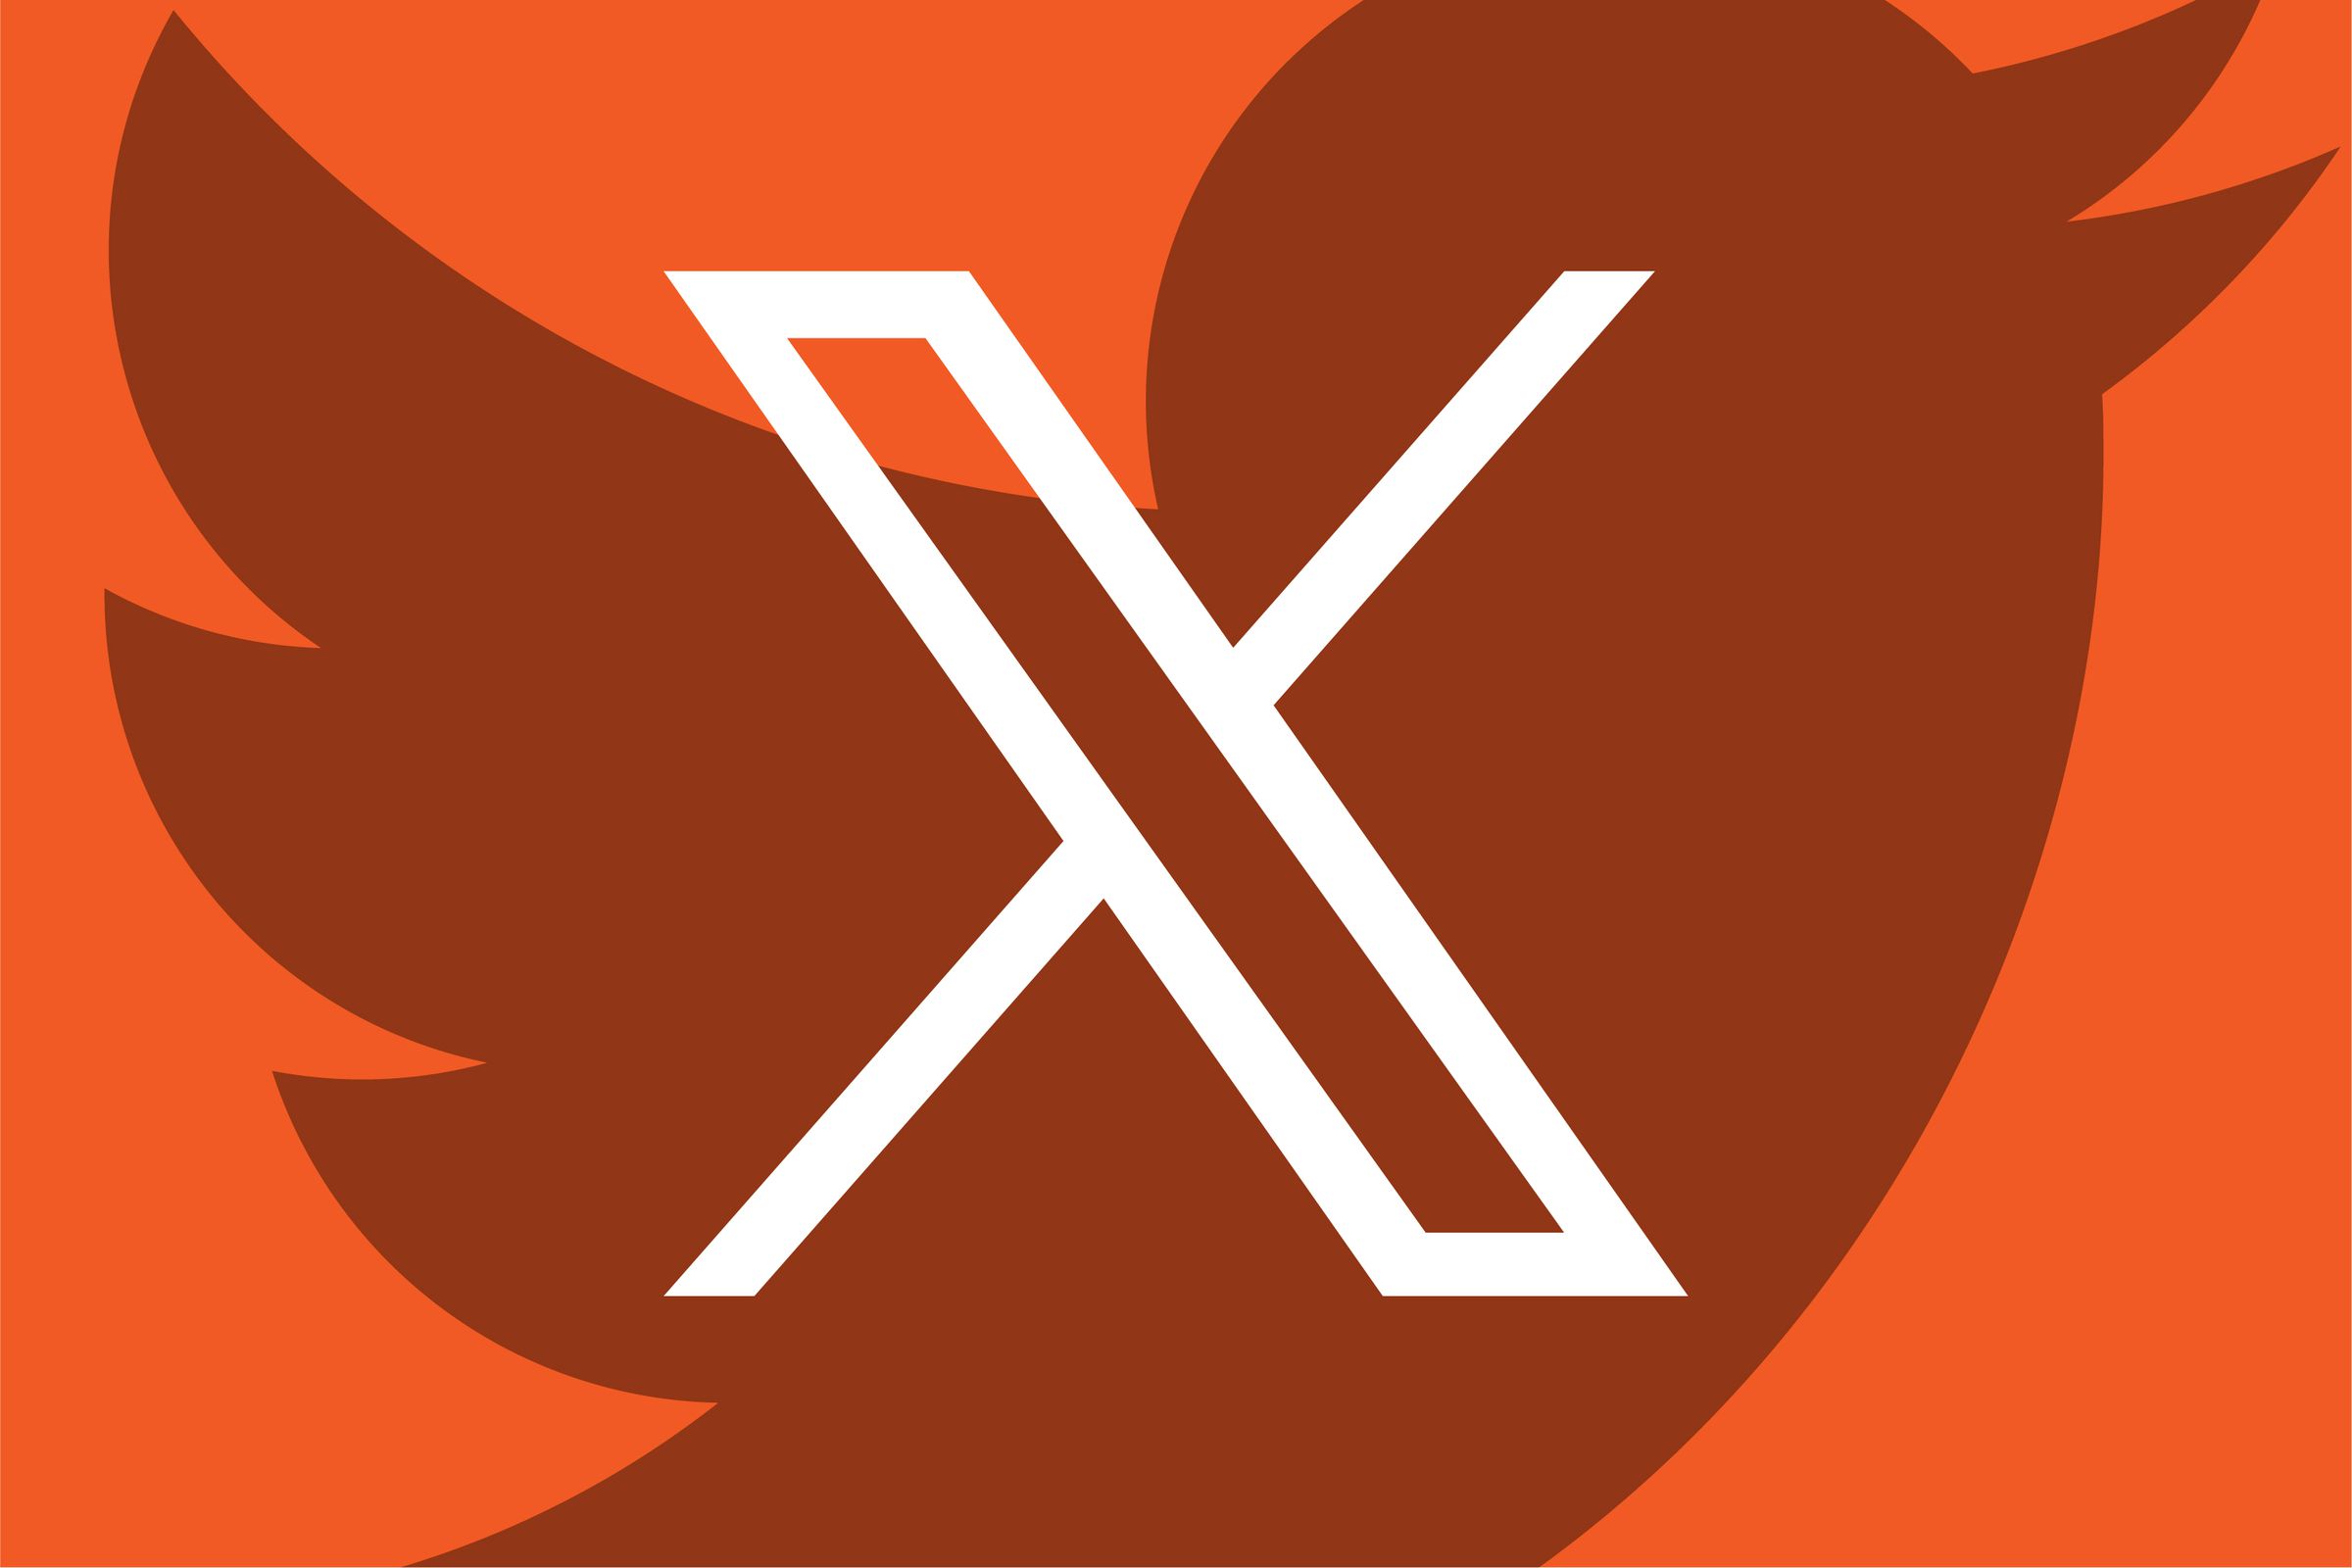 The Twitter bird behind the X logo on a reddish-orange background